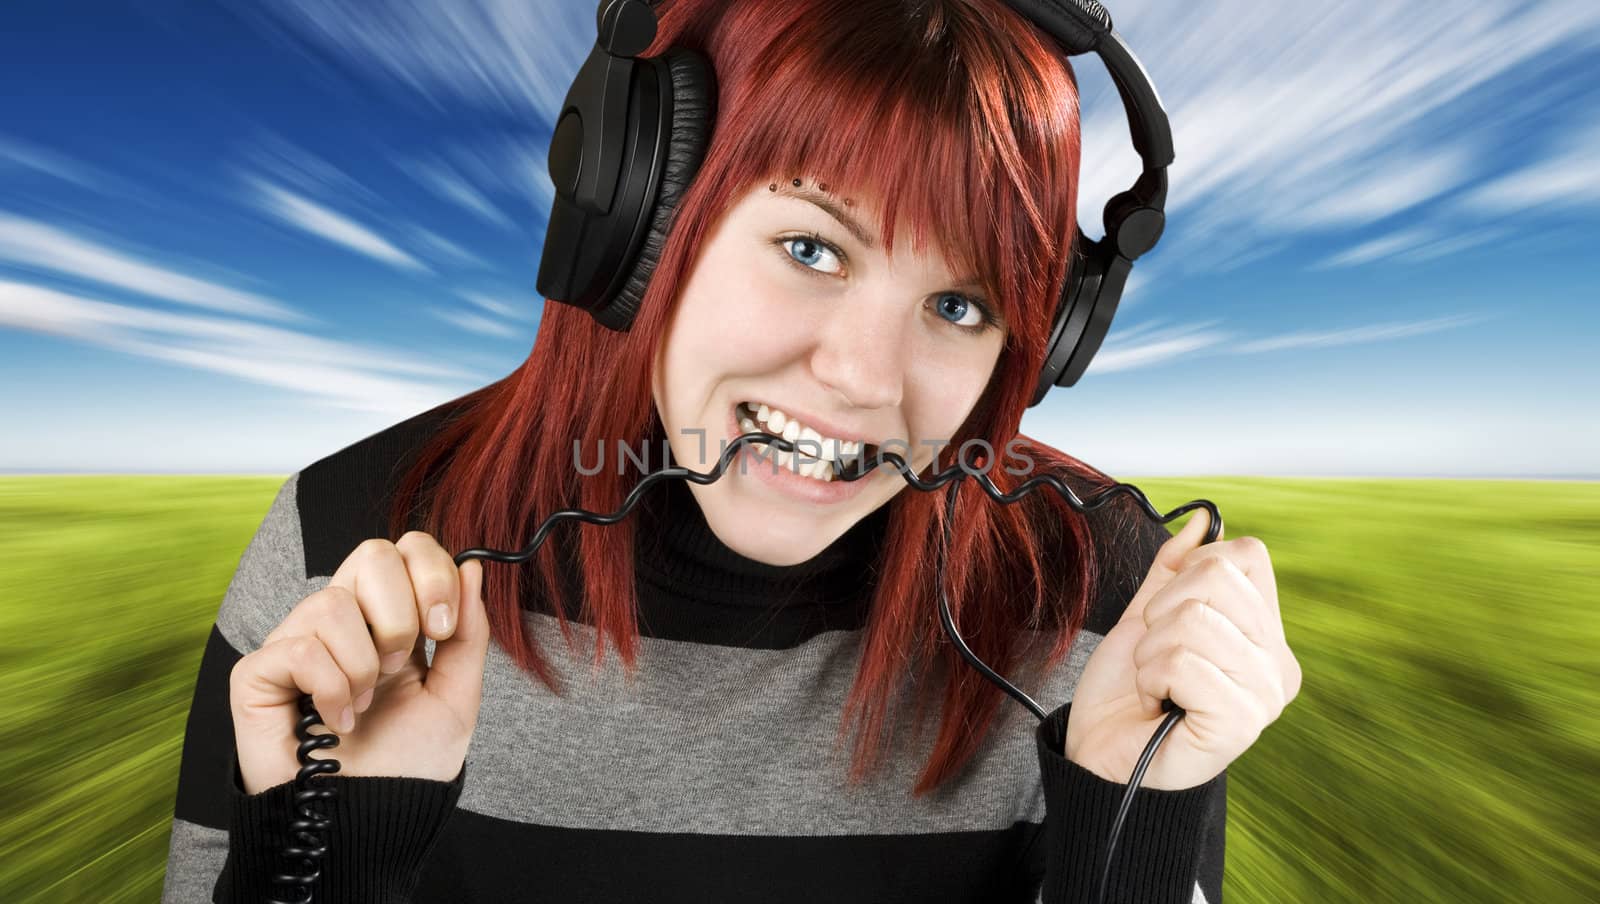 Girl biting headphone cable by domencolja